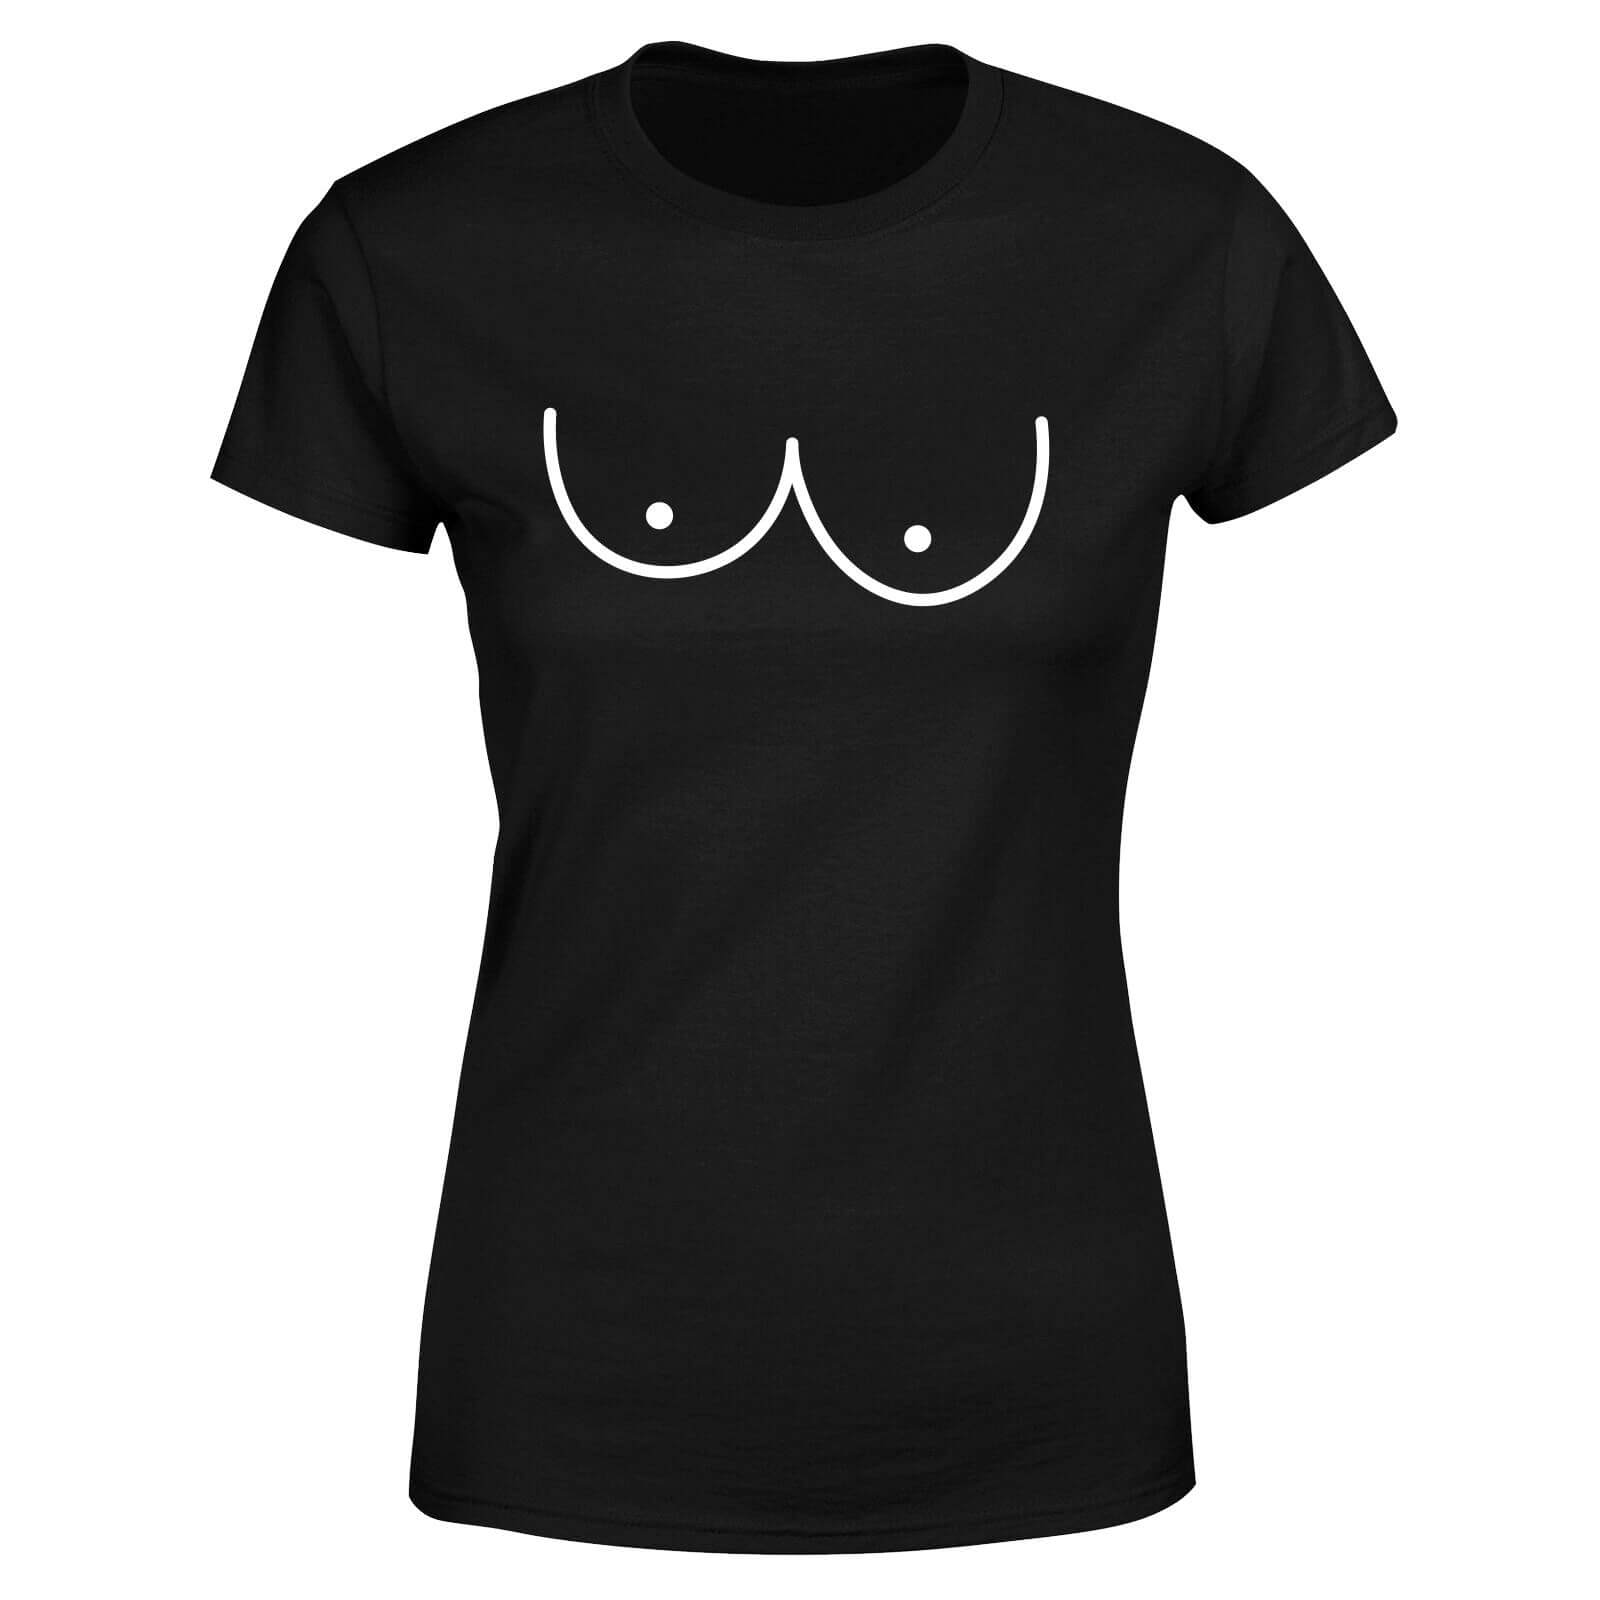 Lovely Hooters Women's T-Shirt - Black - XS - Black